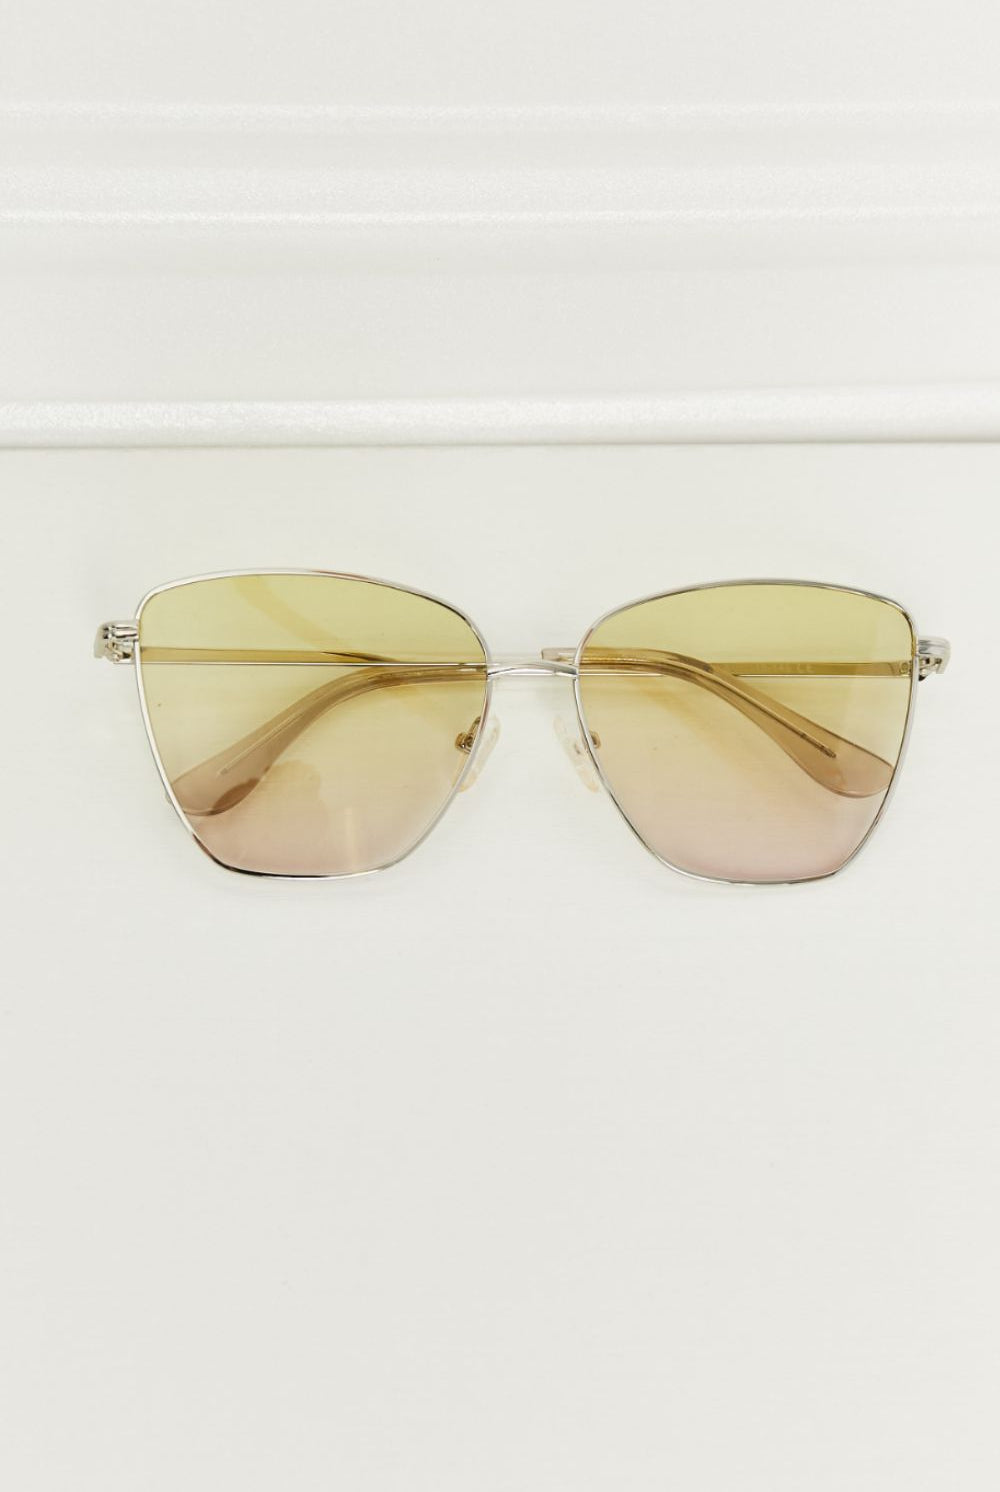 Antique White Livin Metal Frame Full Rim Sunglasses Sunglasses